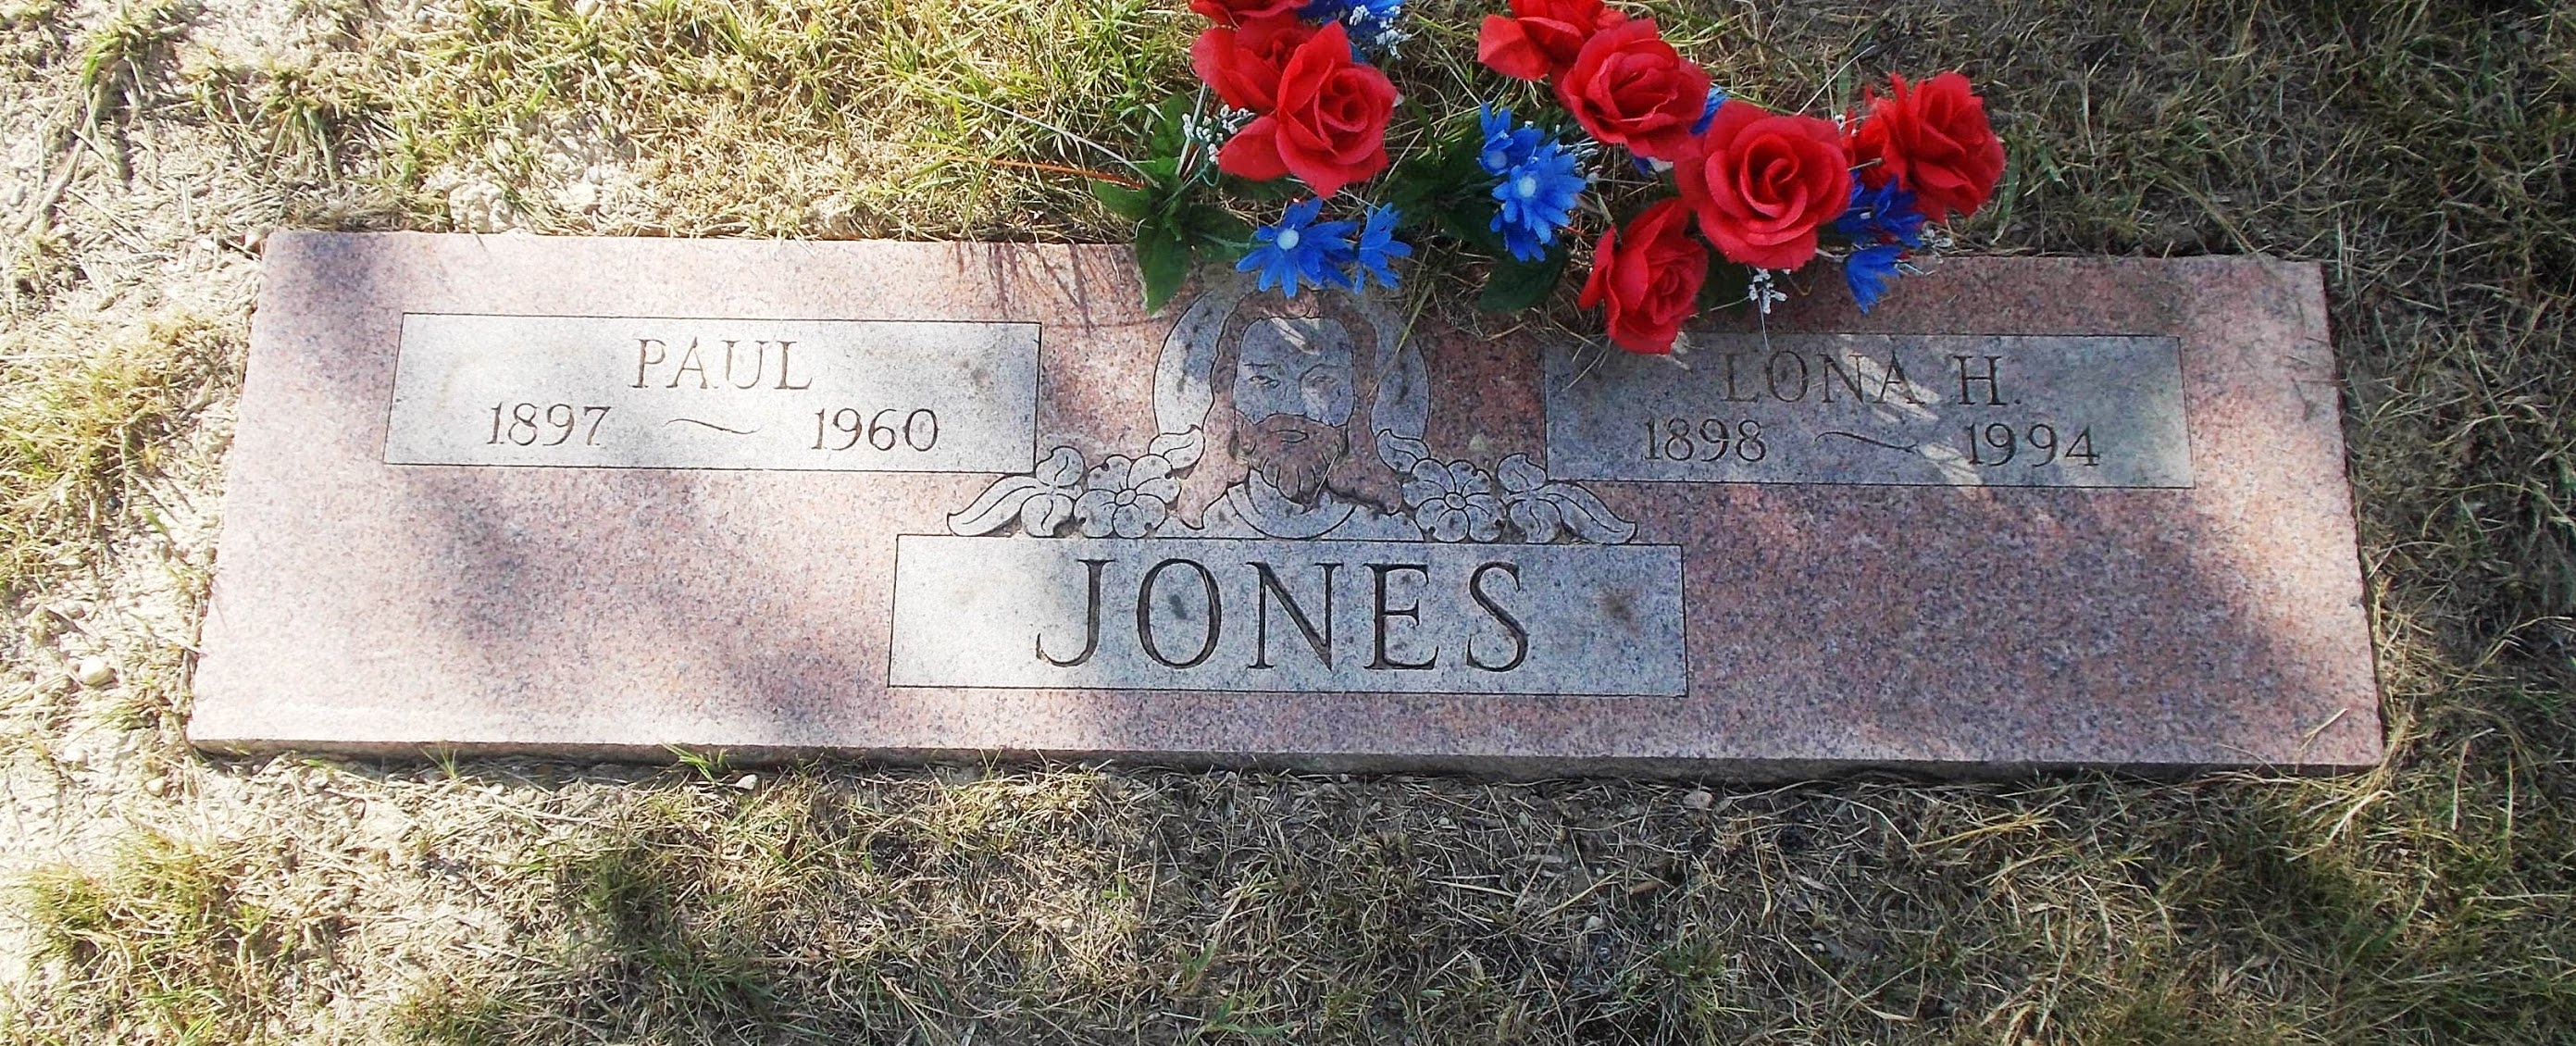 Lona H Jones